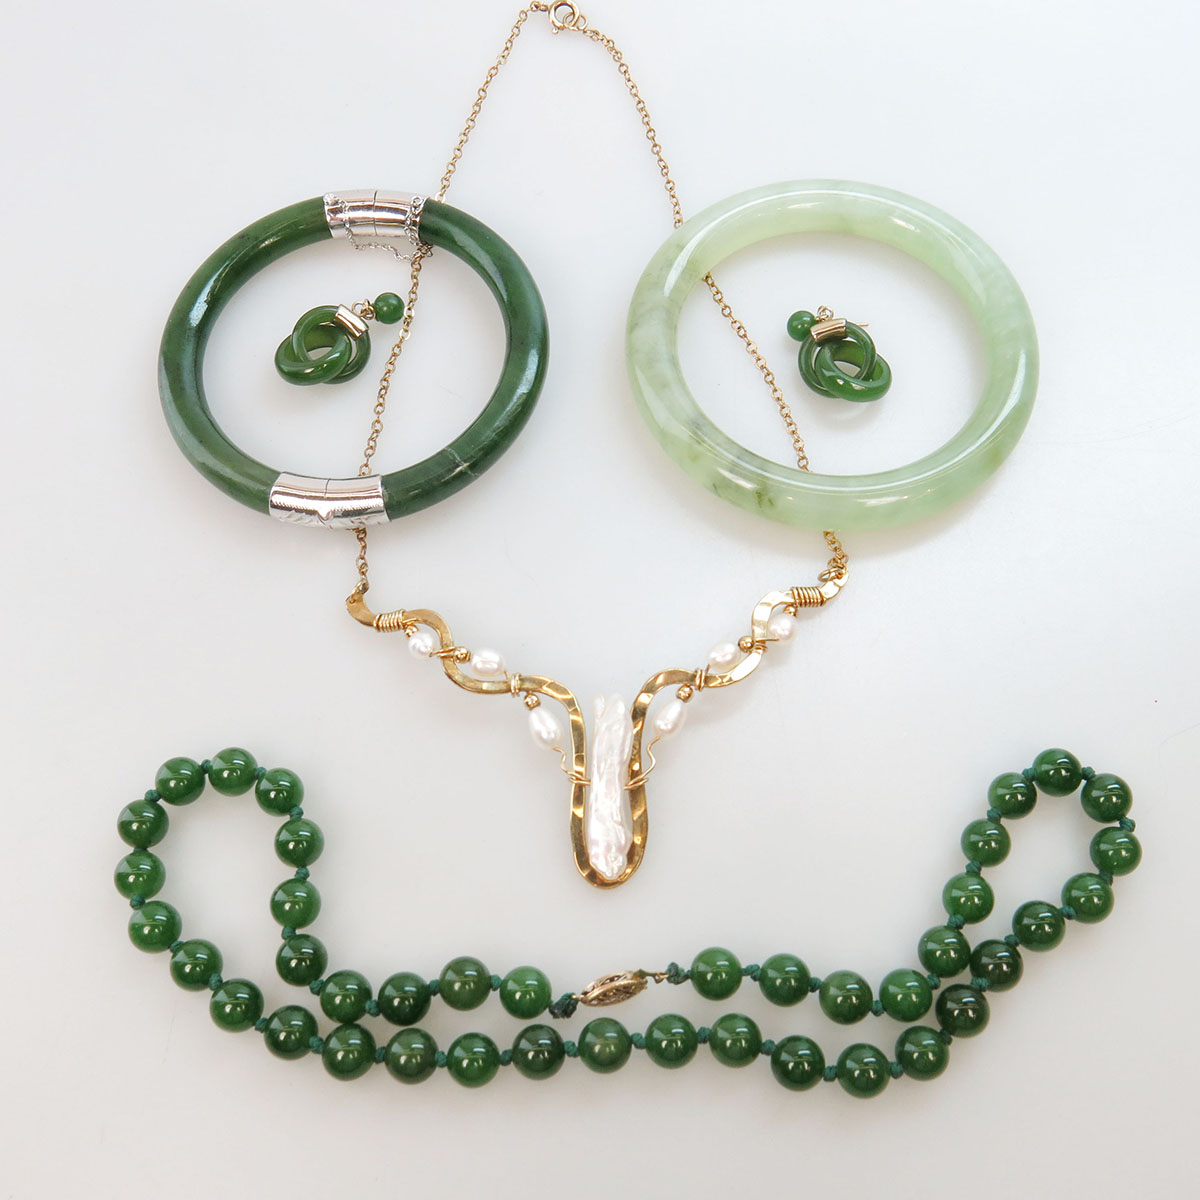 Small Quantity Of Jade Jewellery, Etc